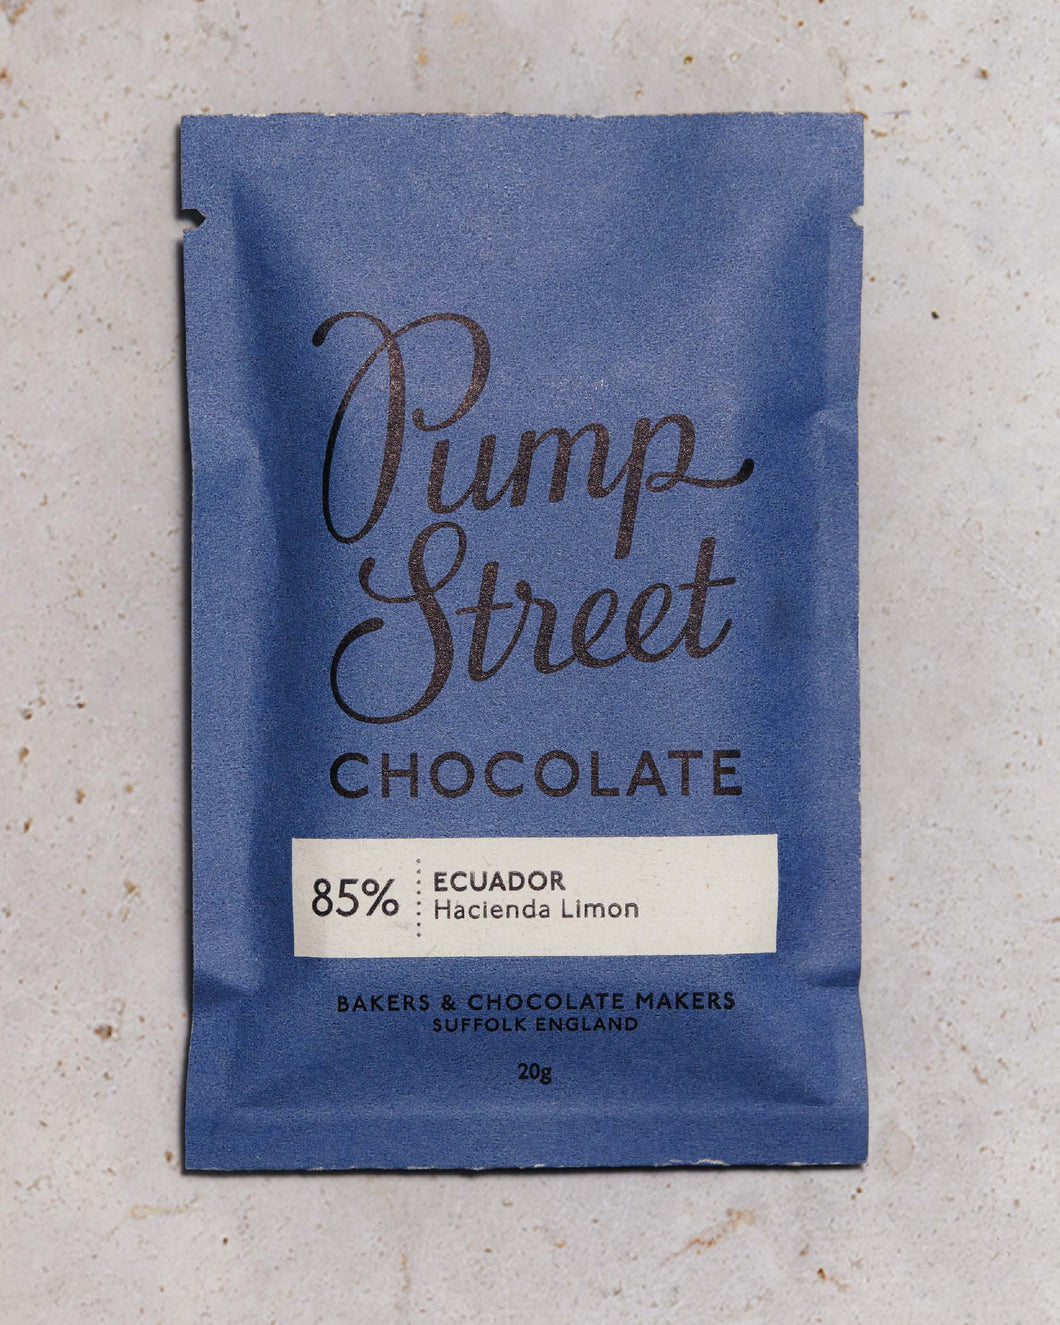 Pump Street Chocolate - Ecuador (85%)